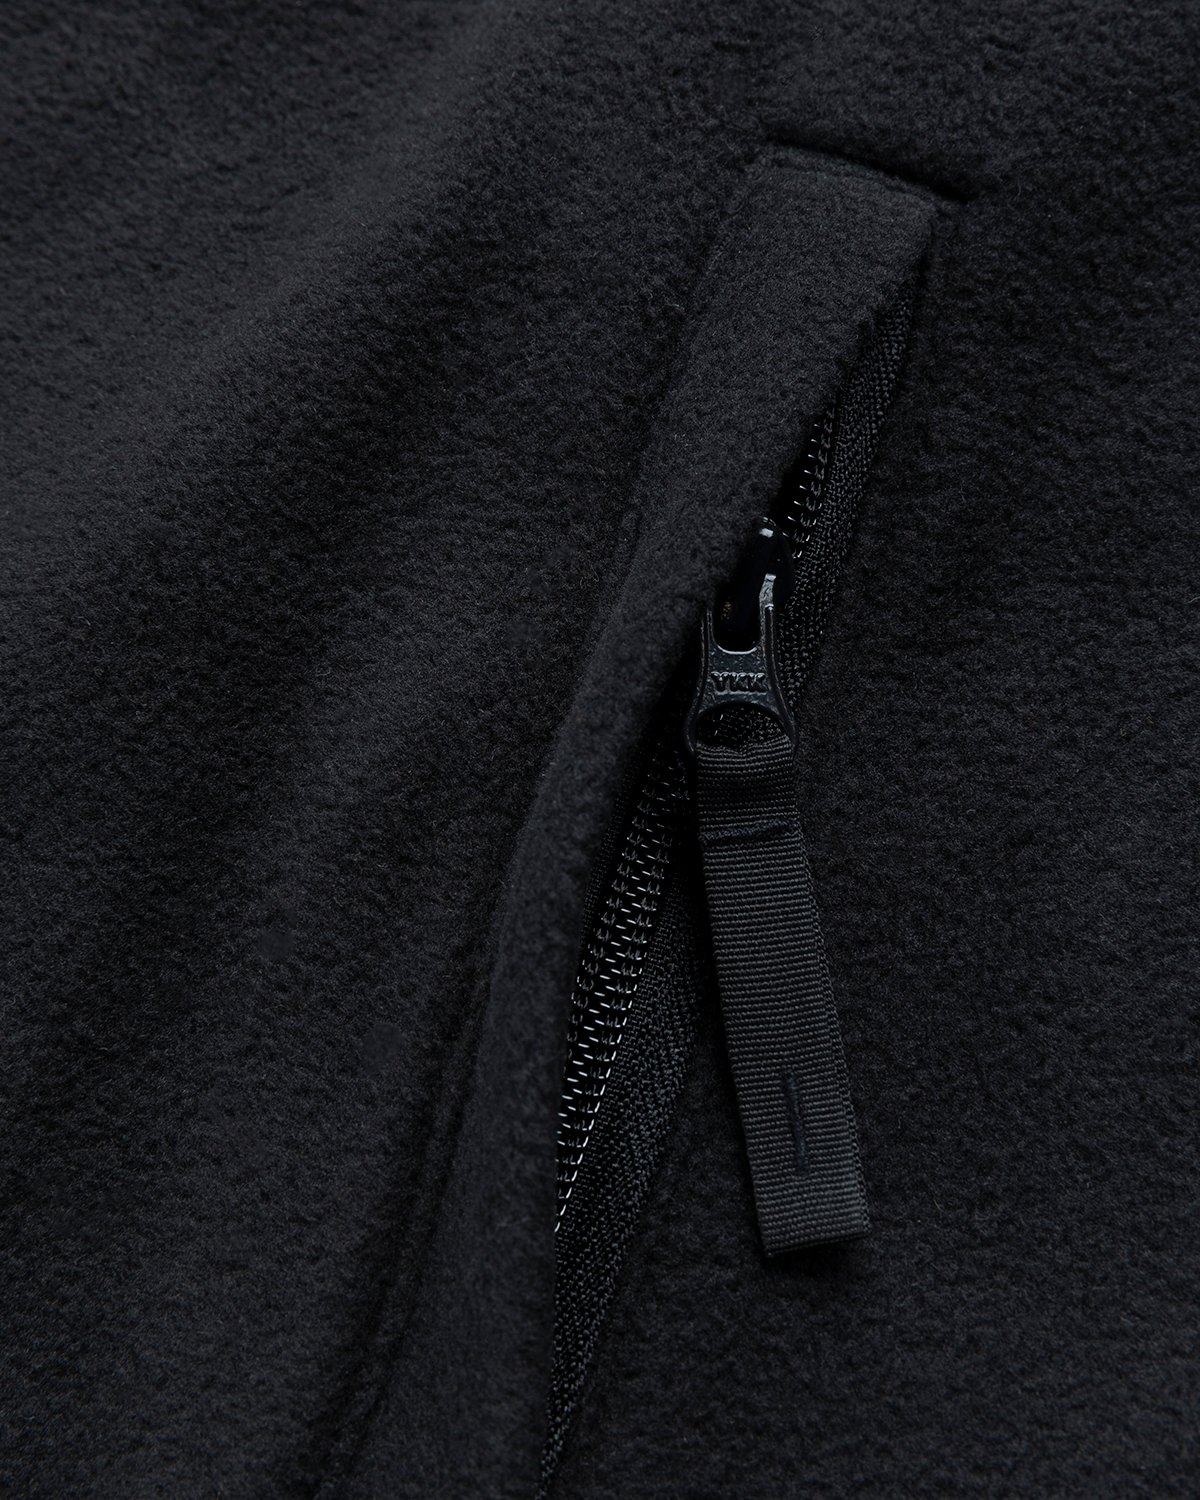 Carhartt WIP - Beaumont Jacket Black - Clothing - Black - Image 6